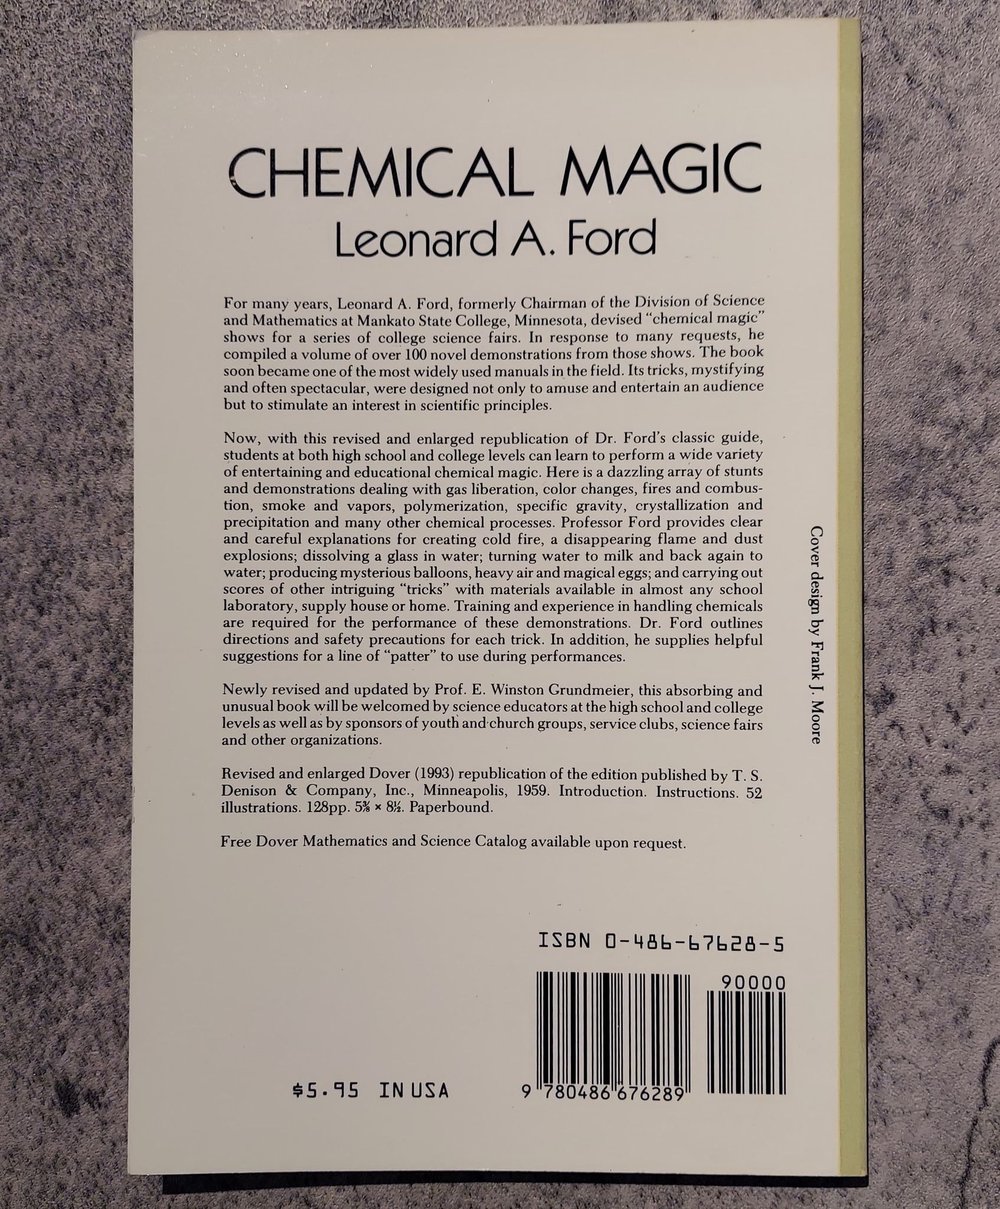 Chemical Magic, by Leonard A. Ford